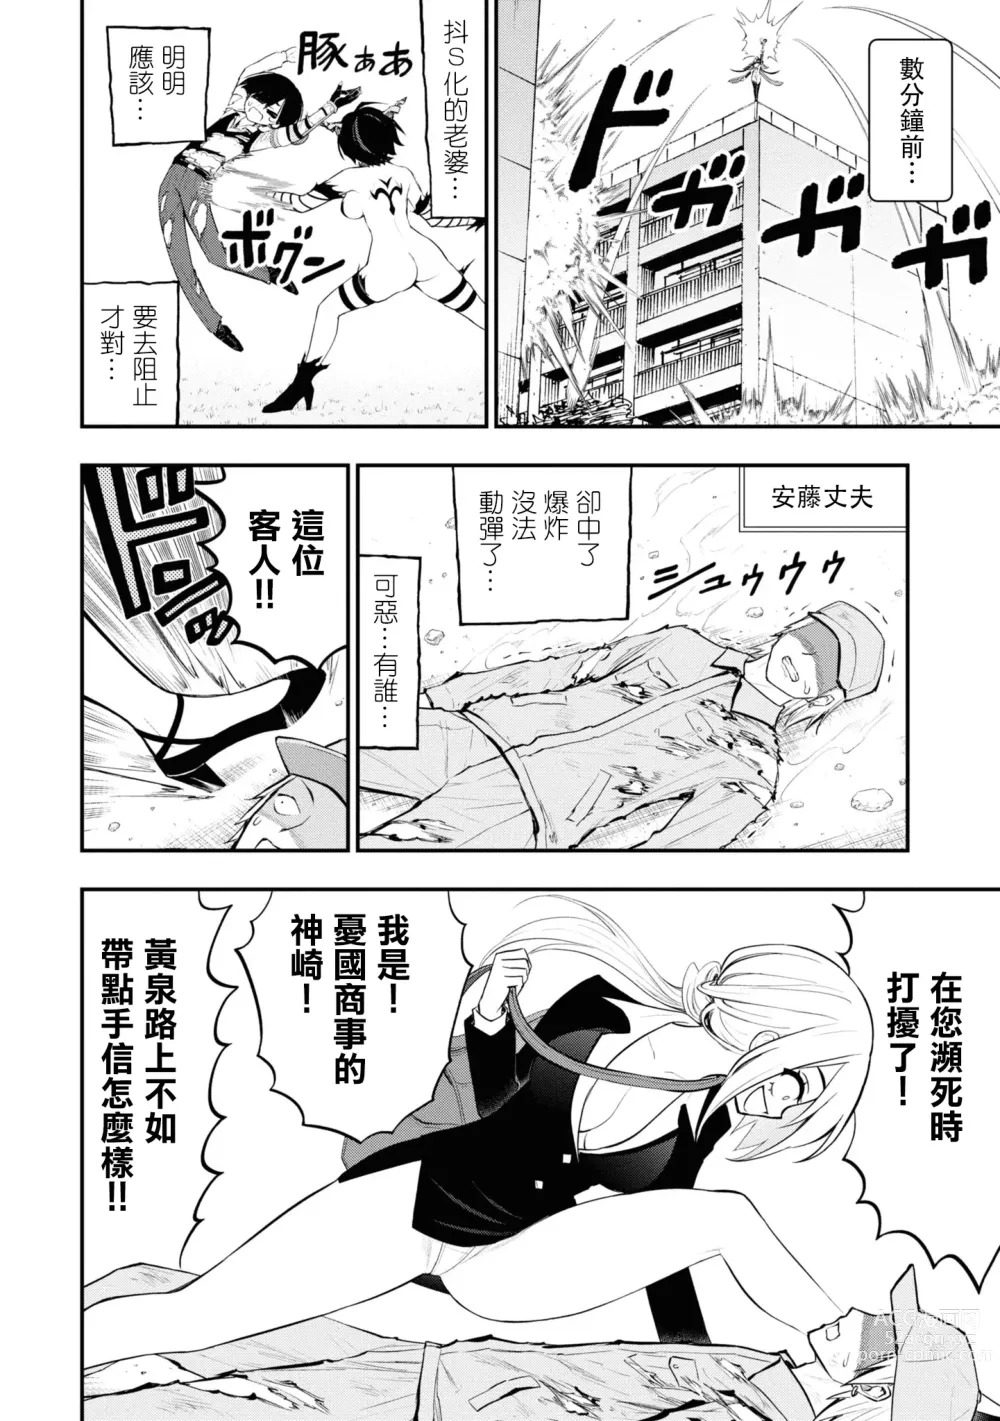 Page 113 of manga 淫獄小區 15-19話